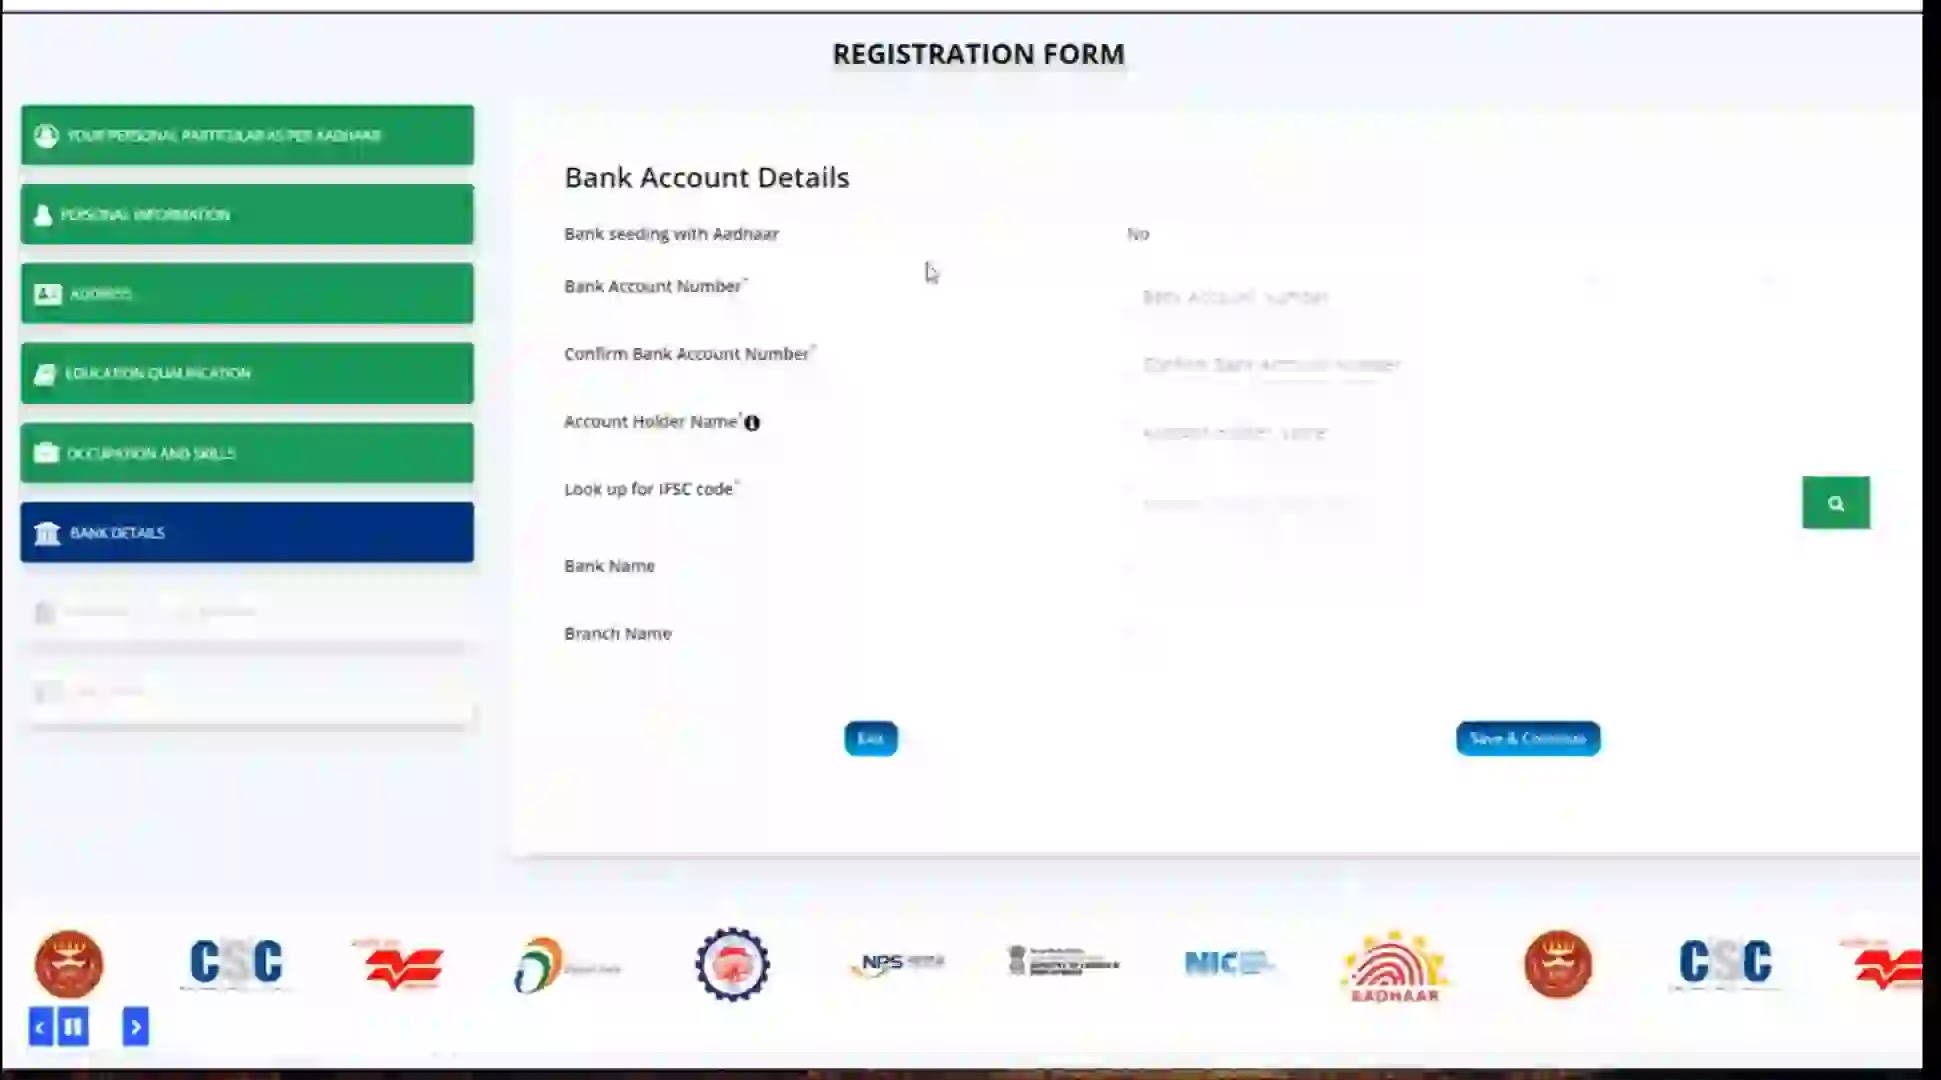 e SHRAM Card - online Registration, Apply рдФрд░ download рдХрд░рдиреЗ рдХрд╛ рд╕рдмрд╕реЗ рдЖрд╕рд╛рди рддрд░реАрдХрд╛